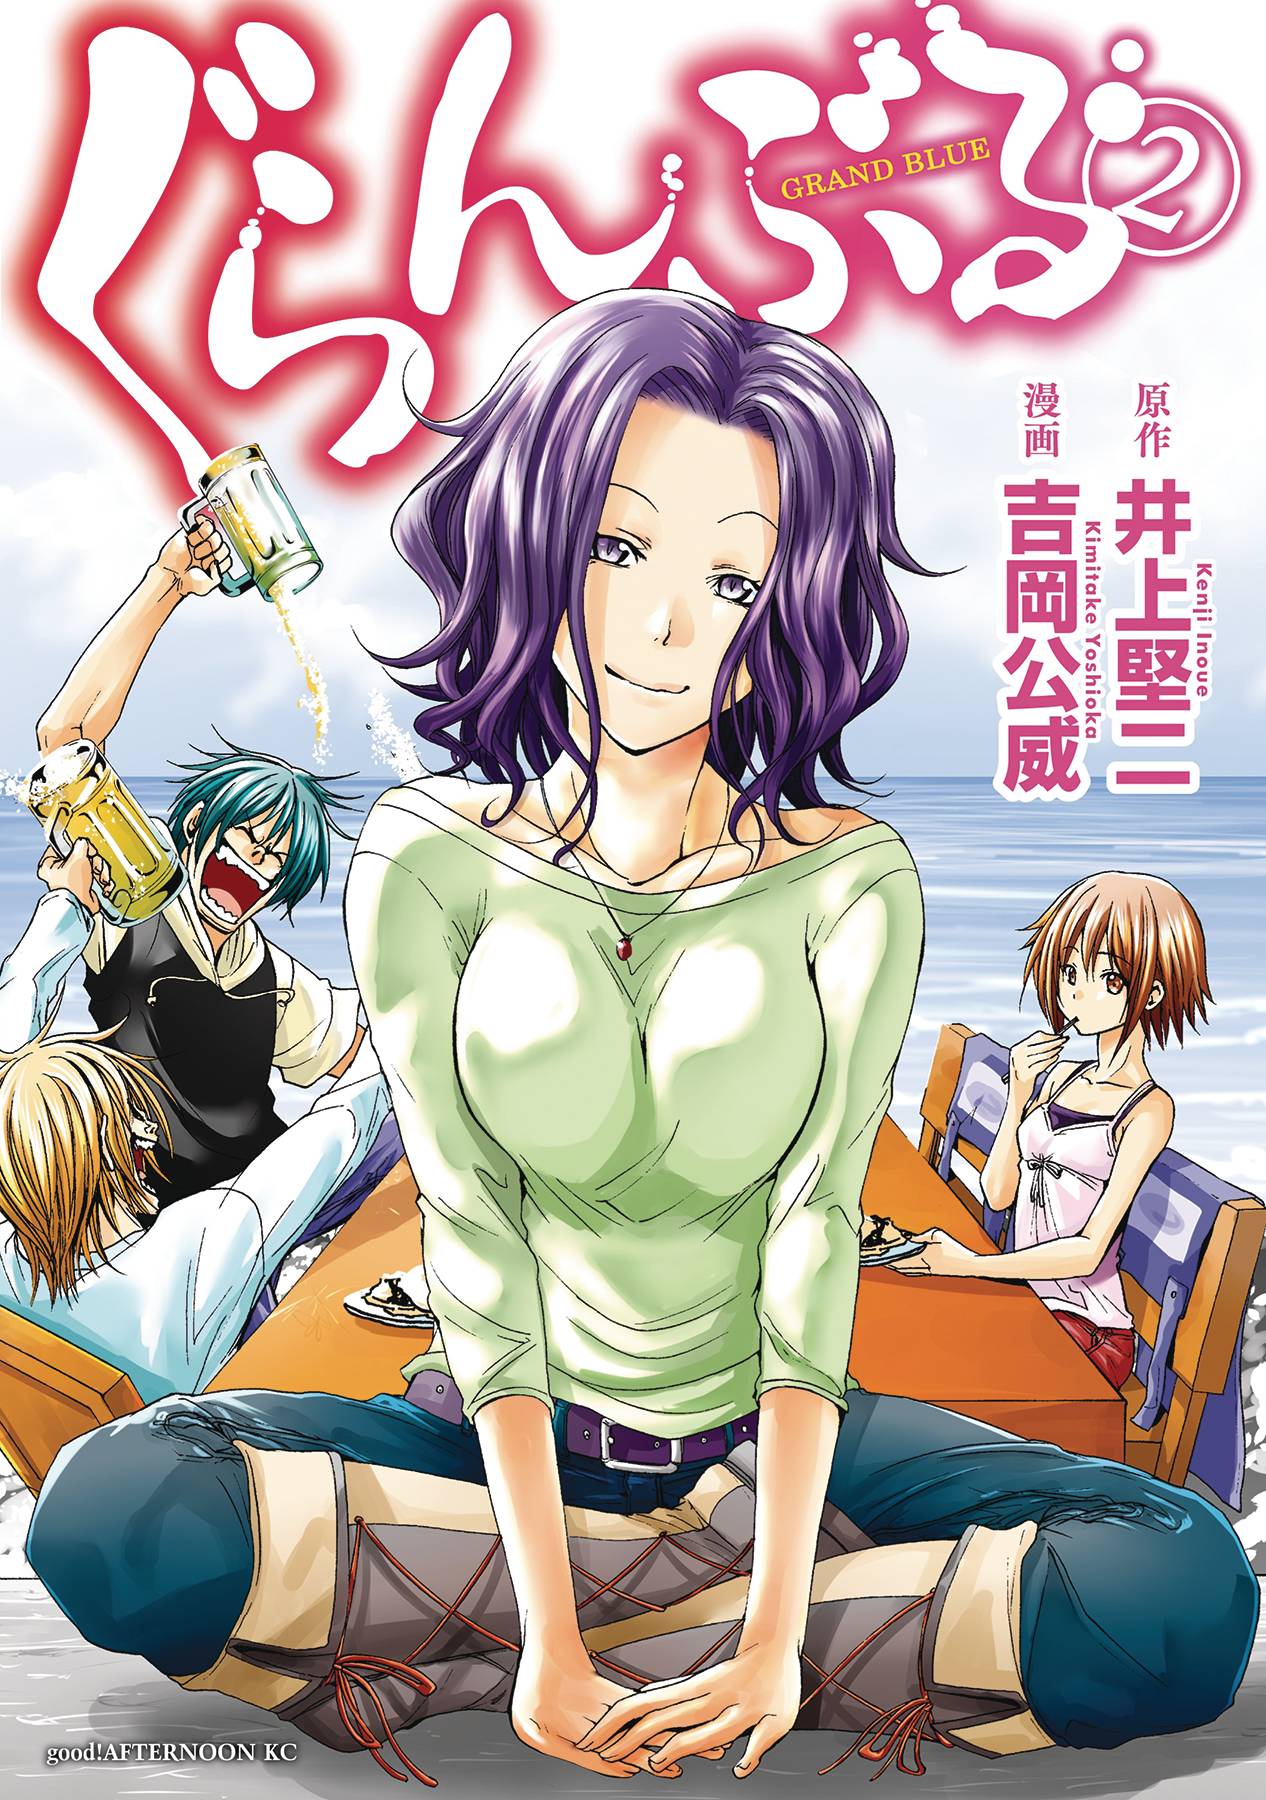 Grand Blue Dreaming Manga Volume 2 (Mature)